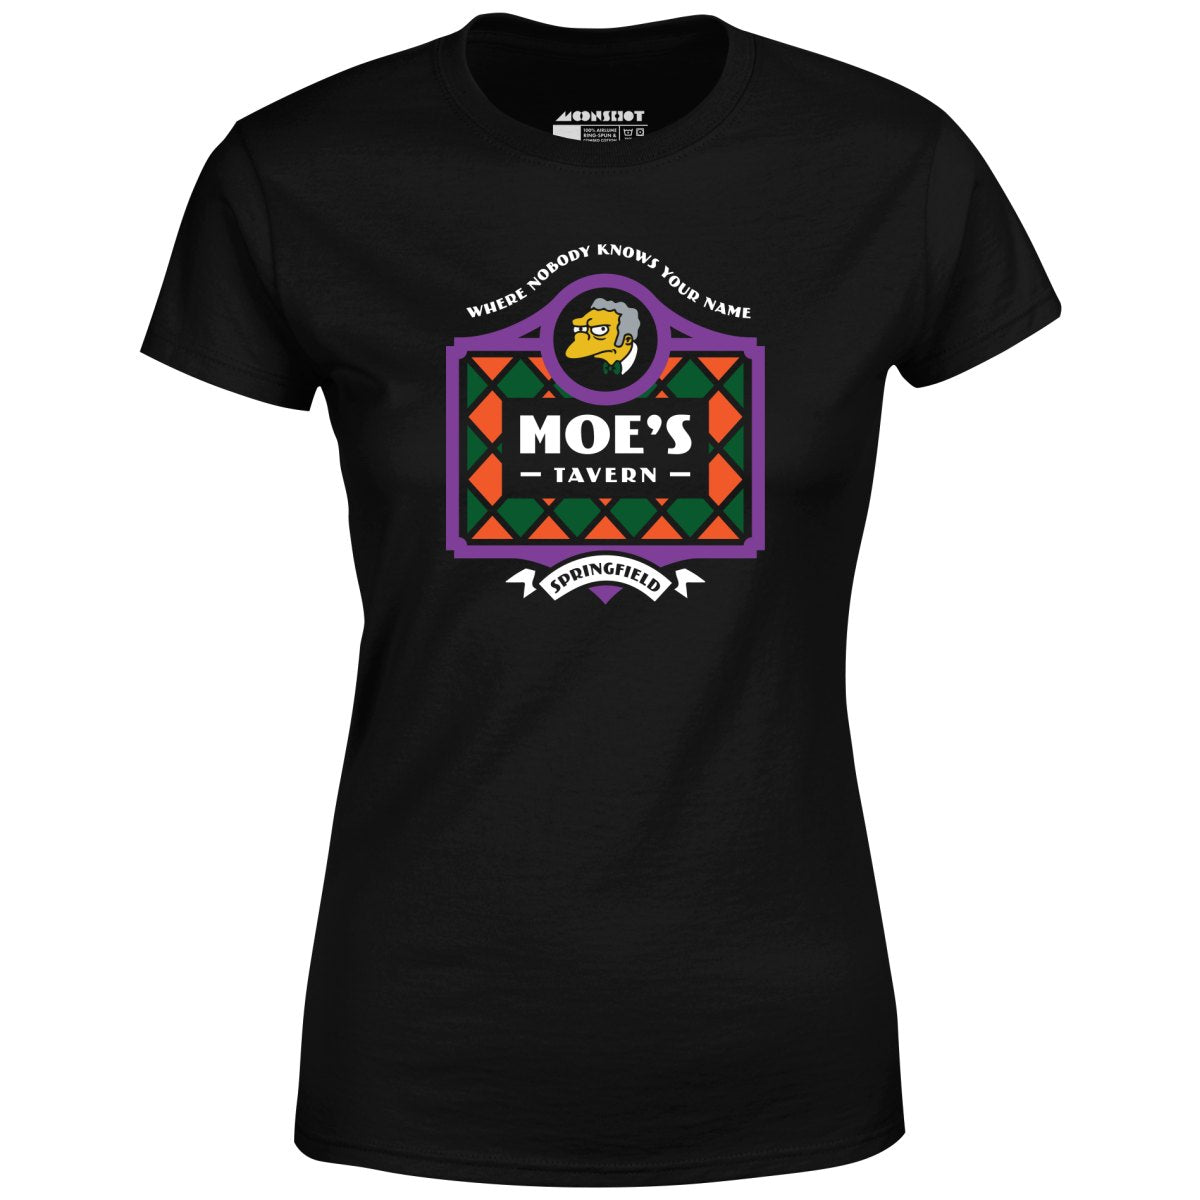 Moe's Tavern - Women's T-Shirt